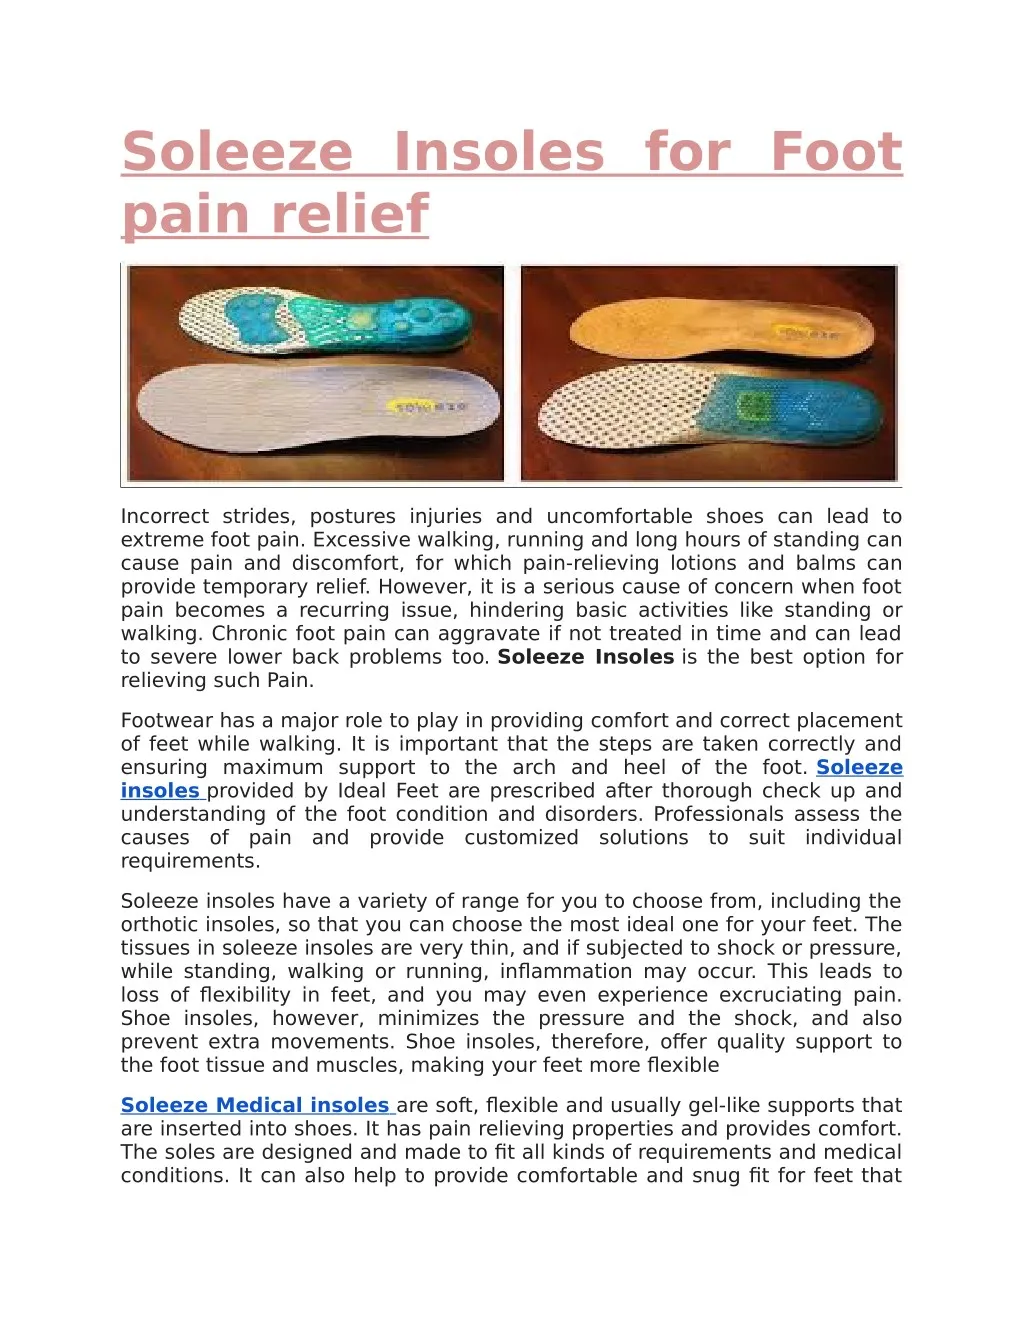 soleeze insoles for foot pain relief